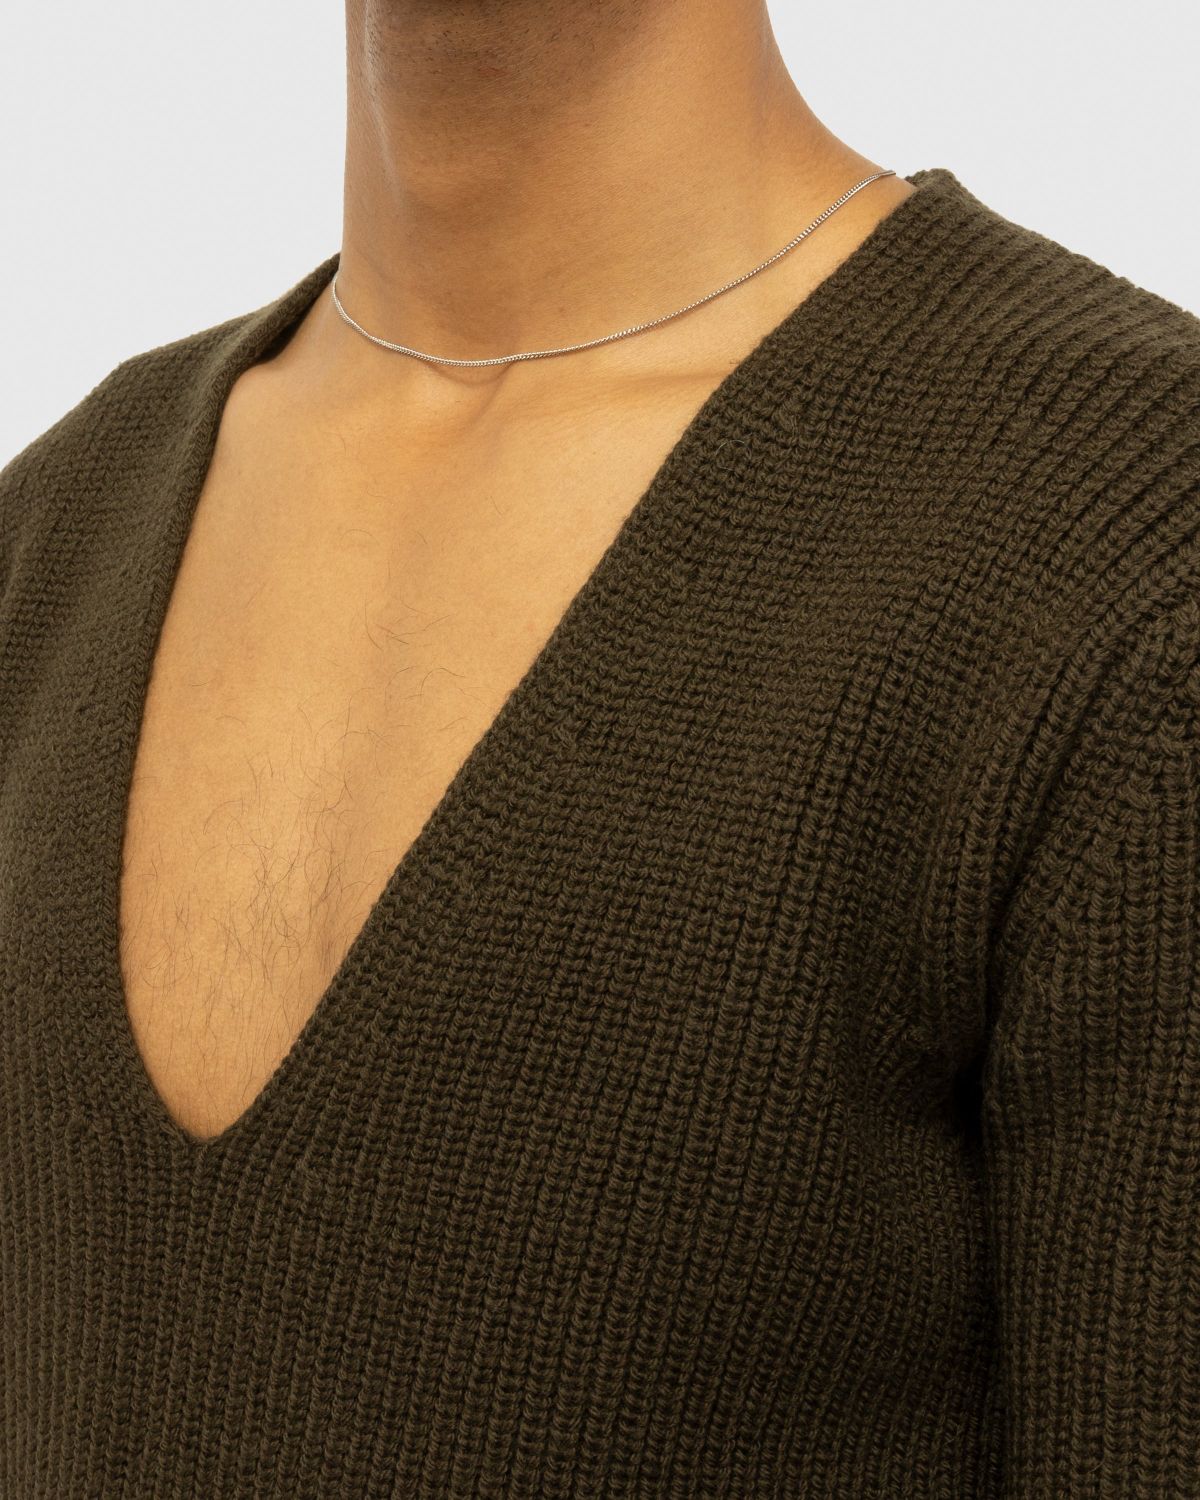 Dries van Noten – Newton Merino Sweater Green - Knitwear - Green - Image 4